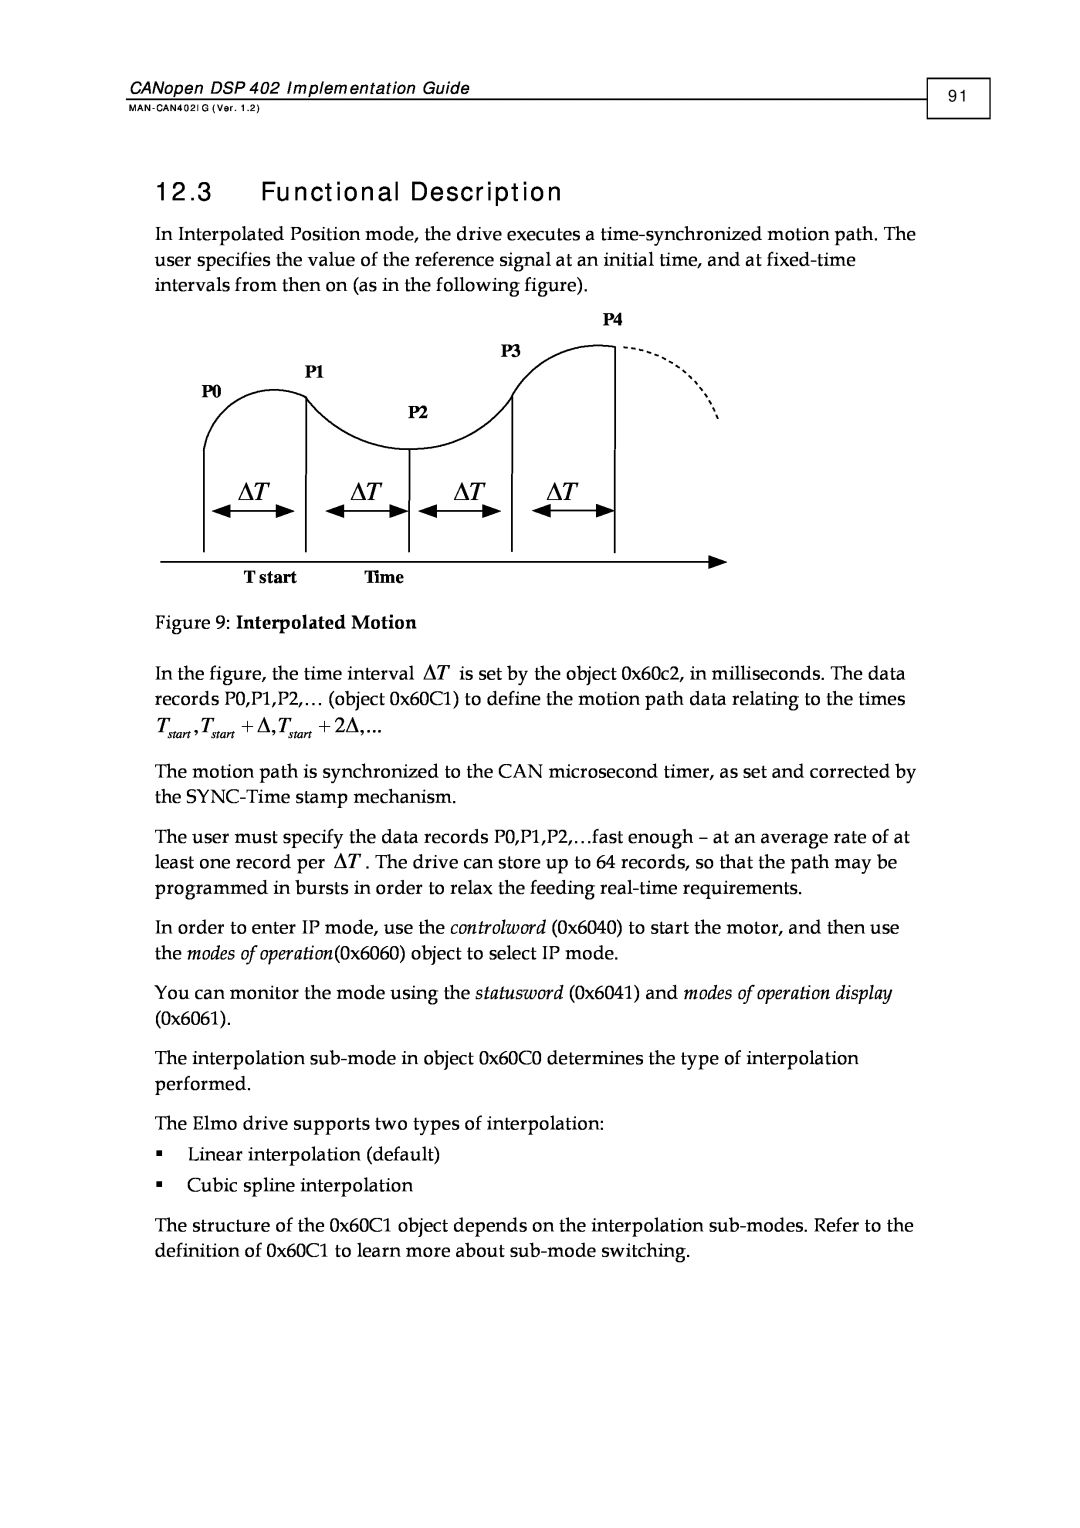 Elmo DSP 402 manual 12.3Functional Description 